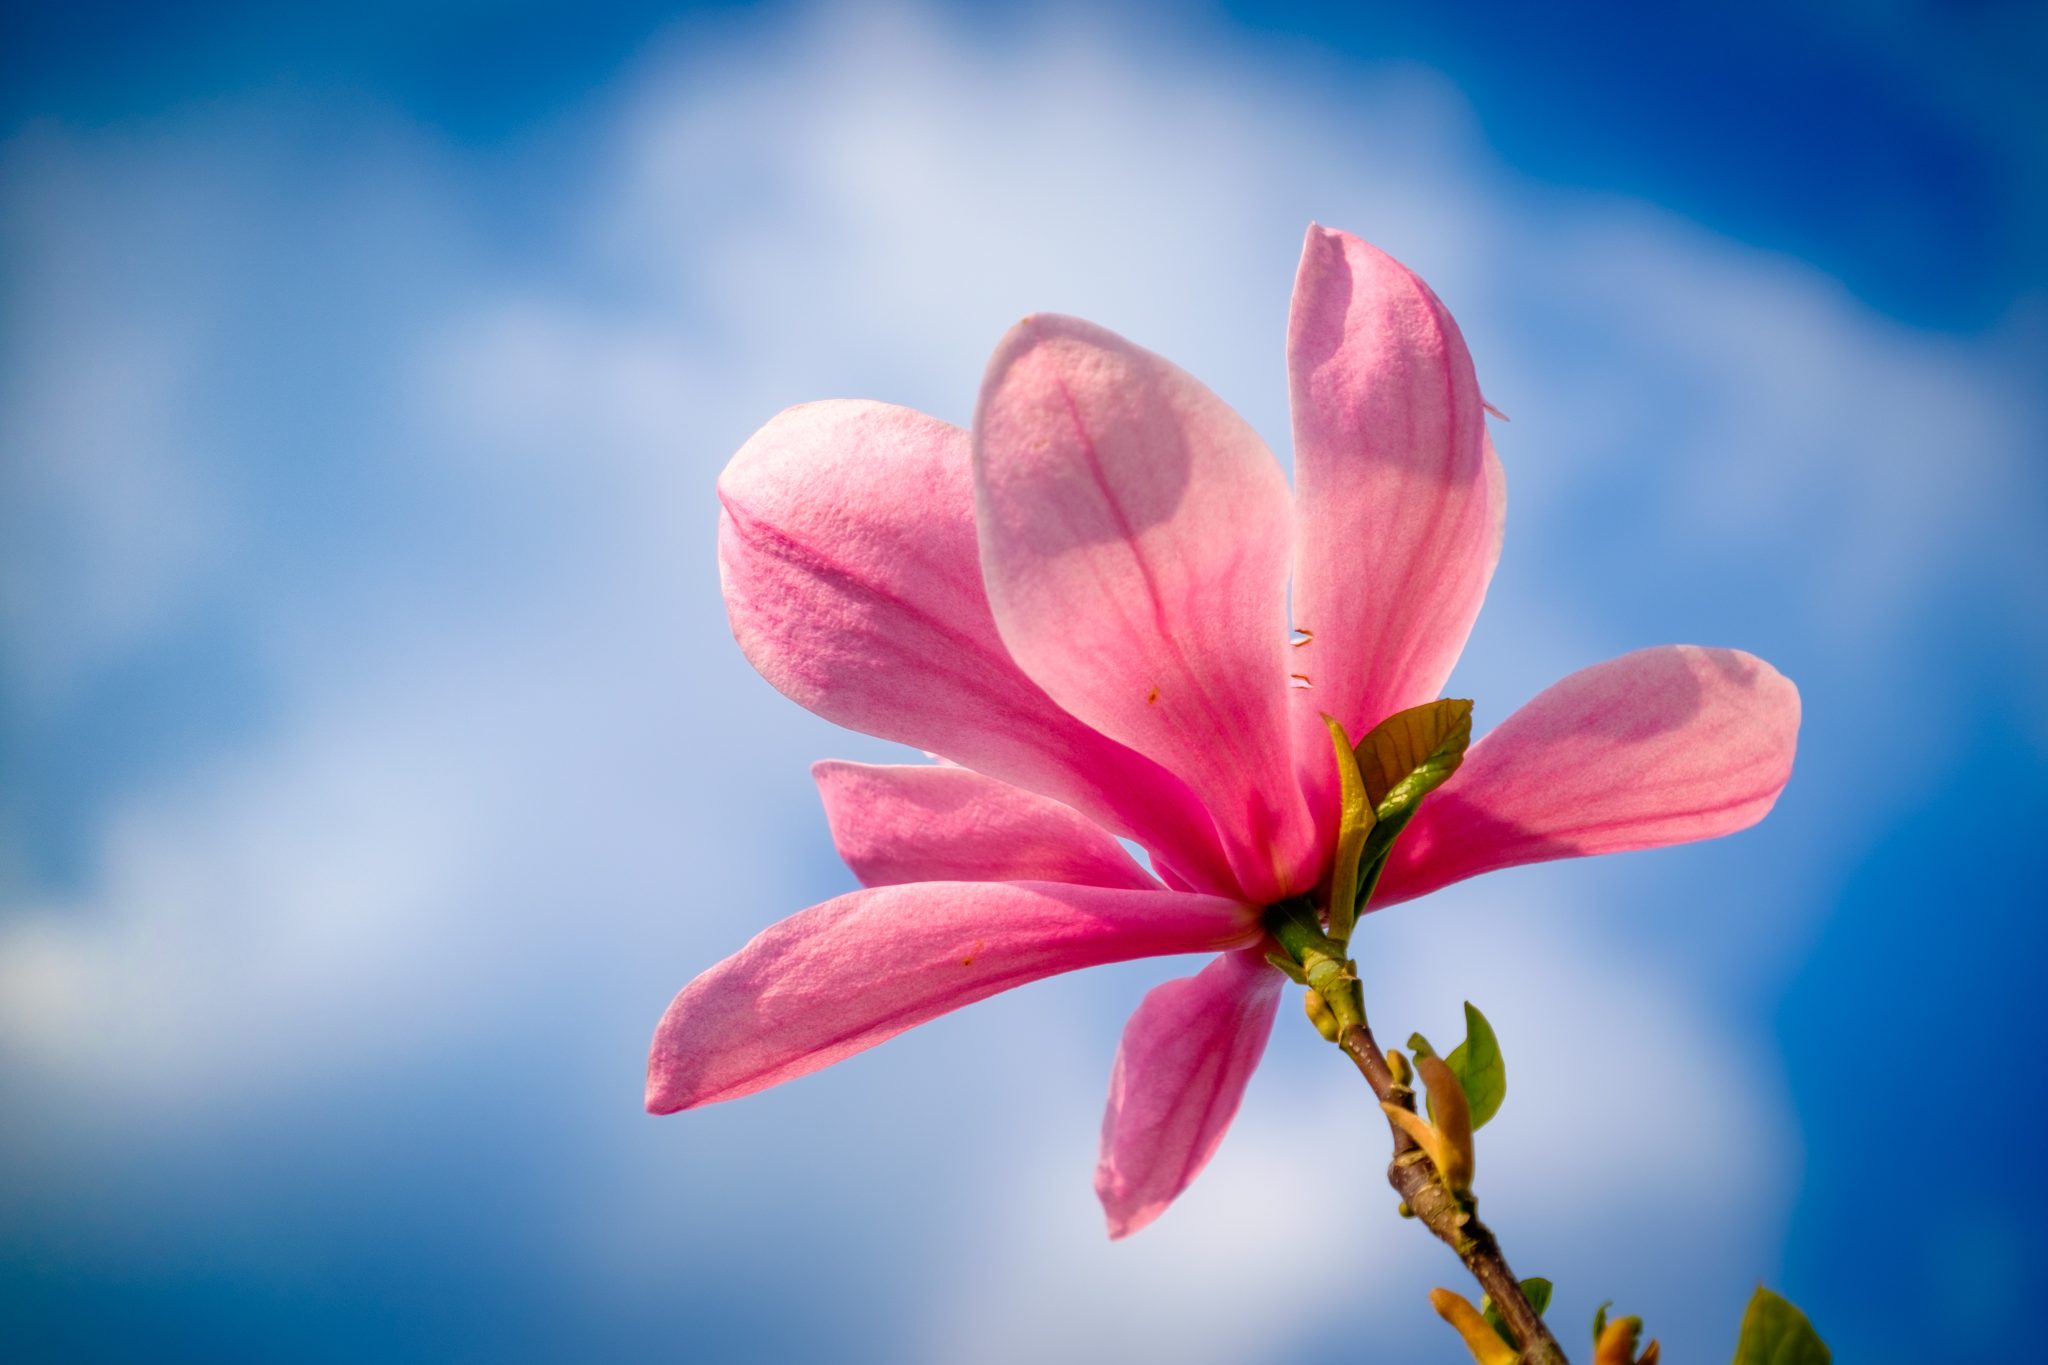 Magnolia flower against a blue sky backdrop